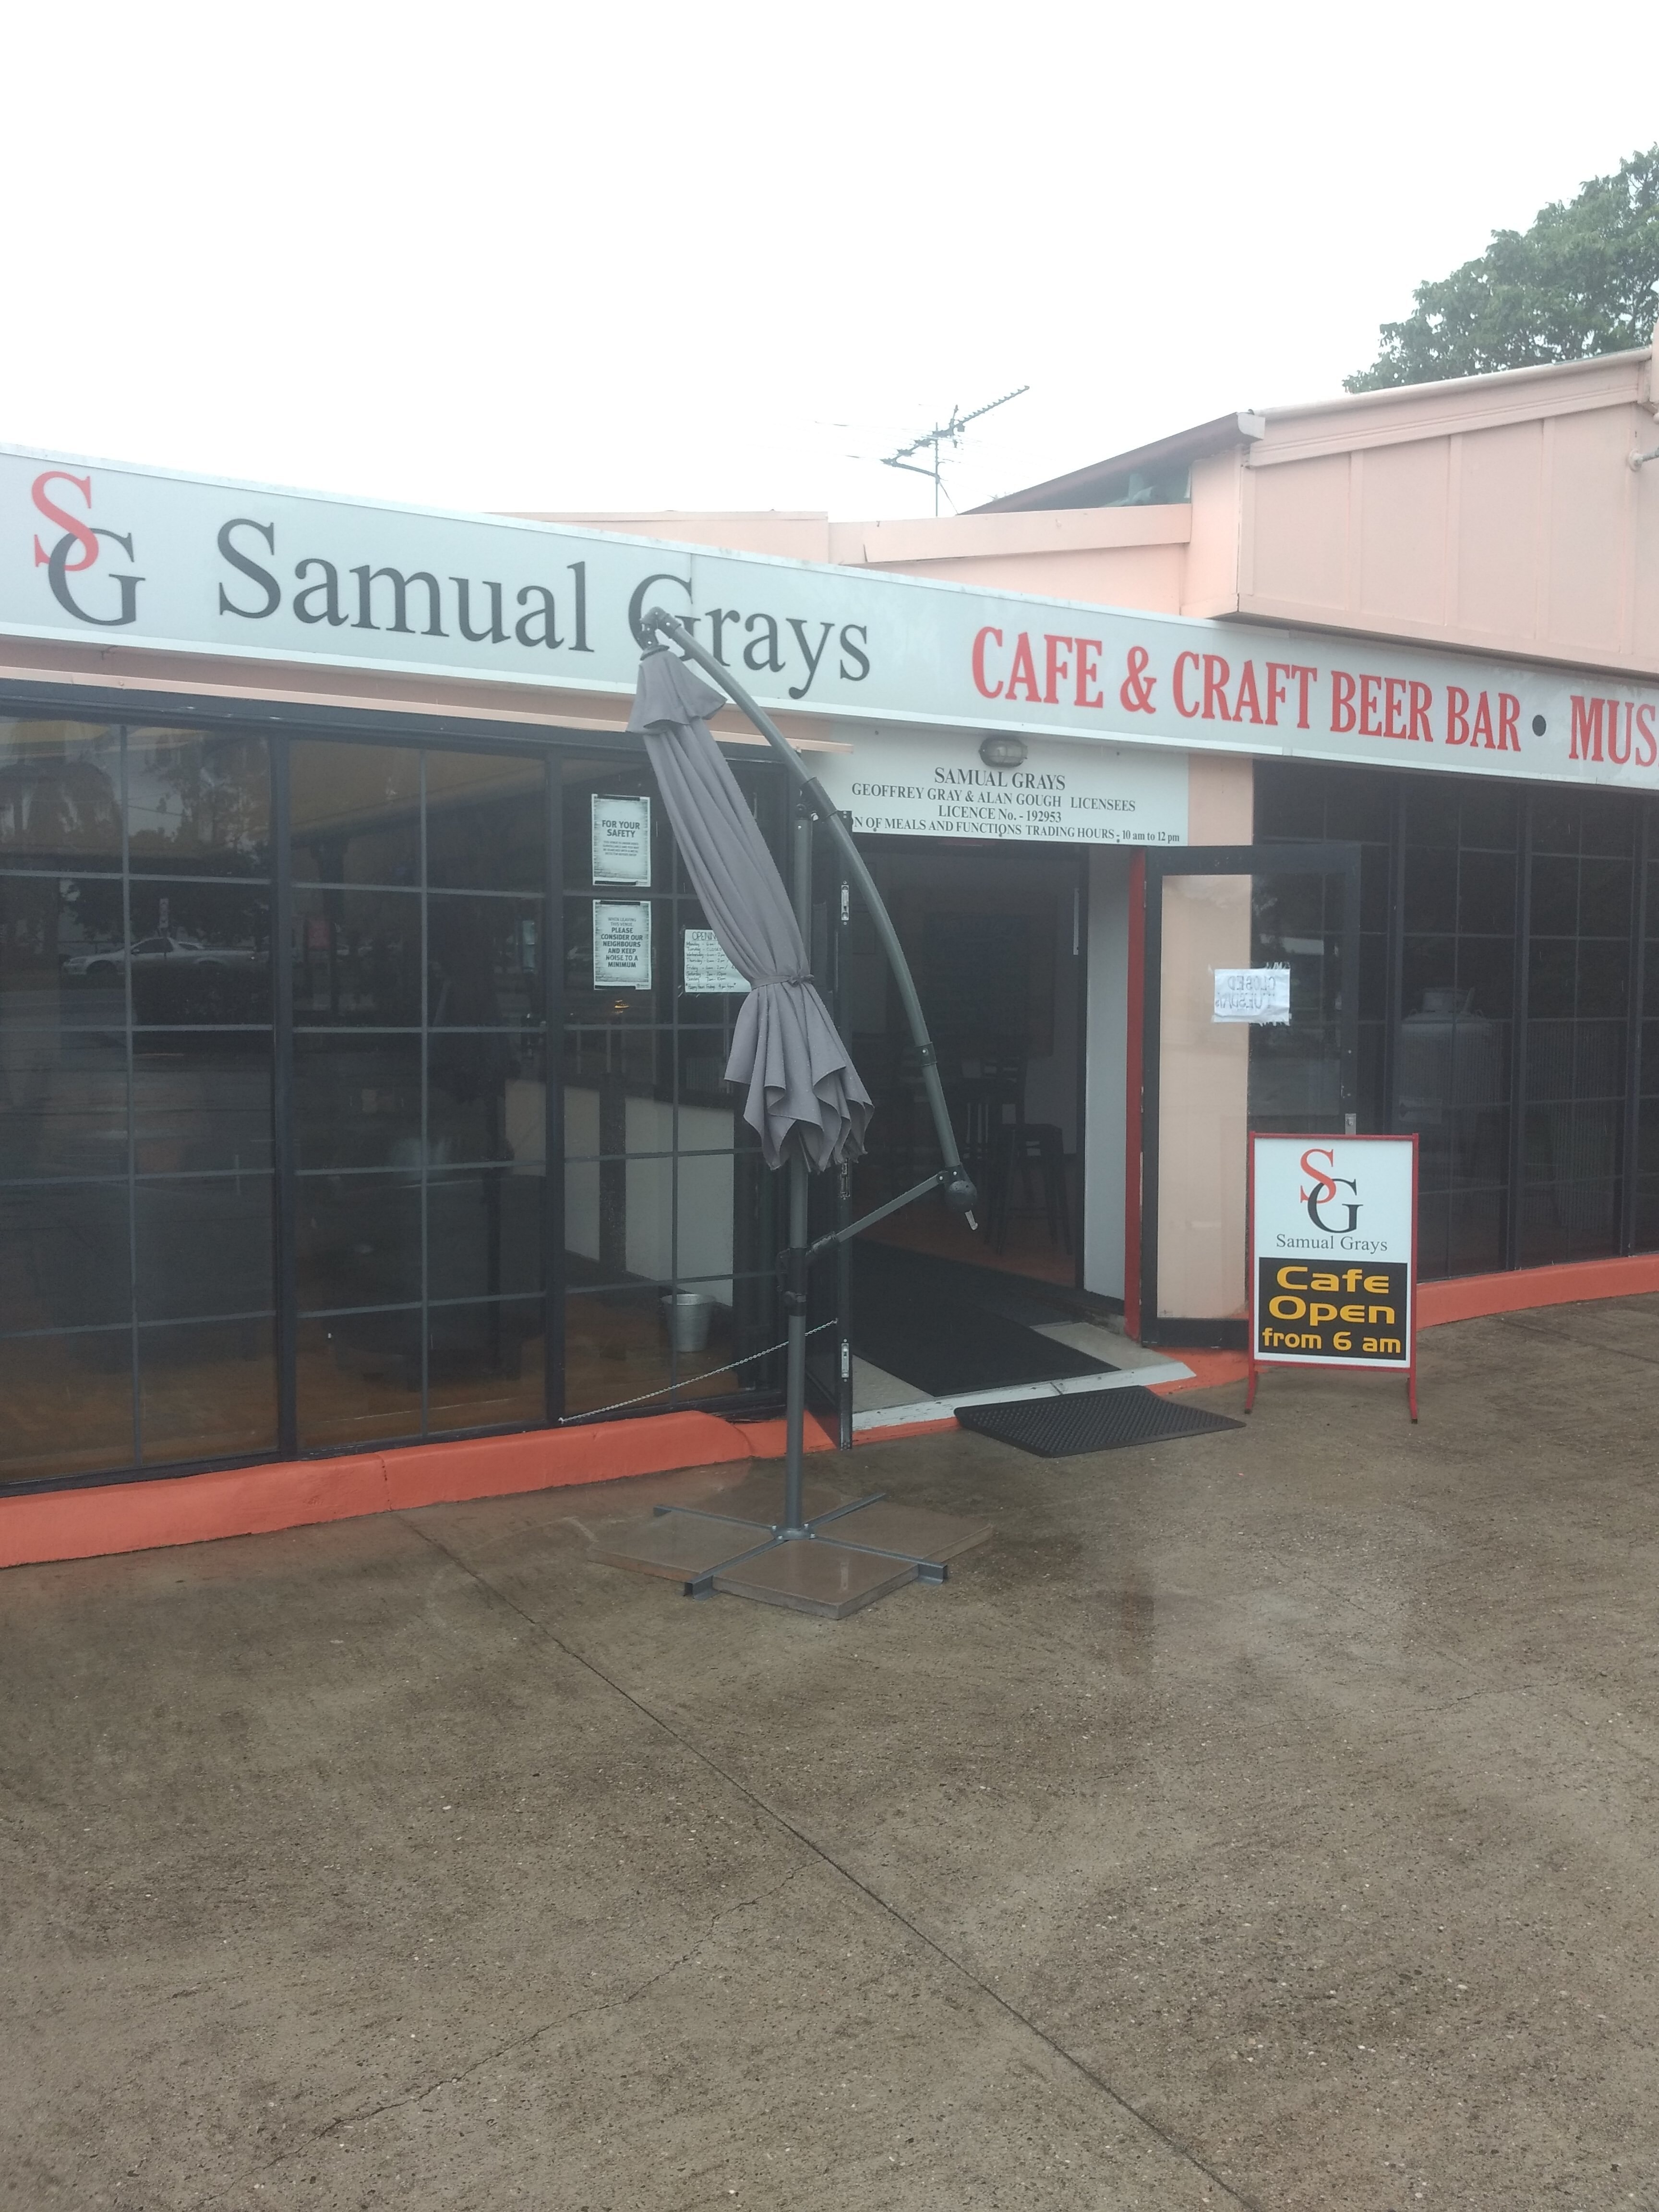 Samual Grays Cafe & Craft Beer Bar